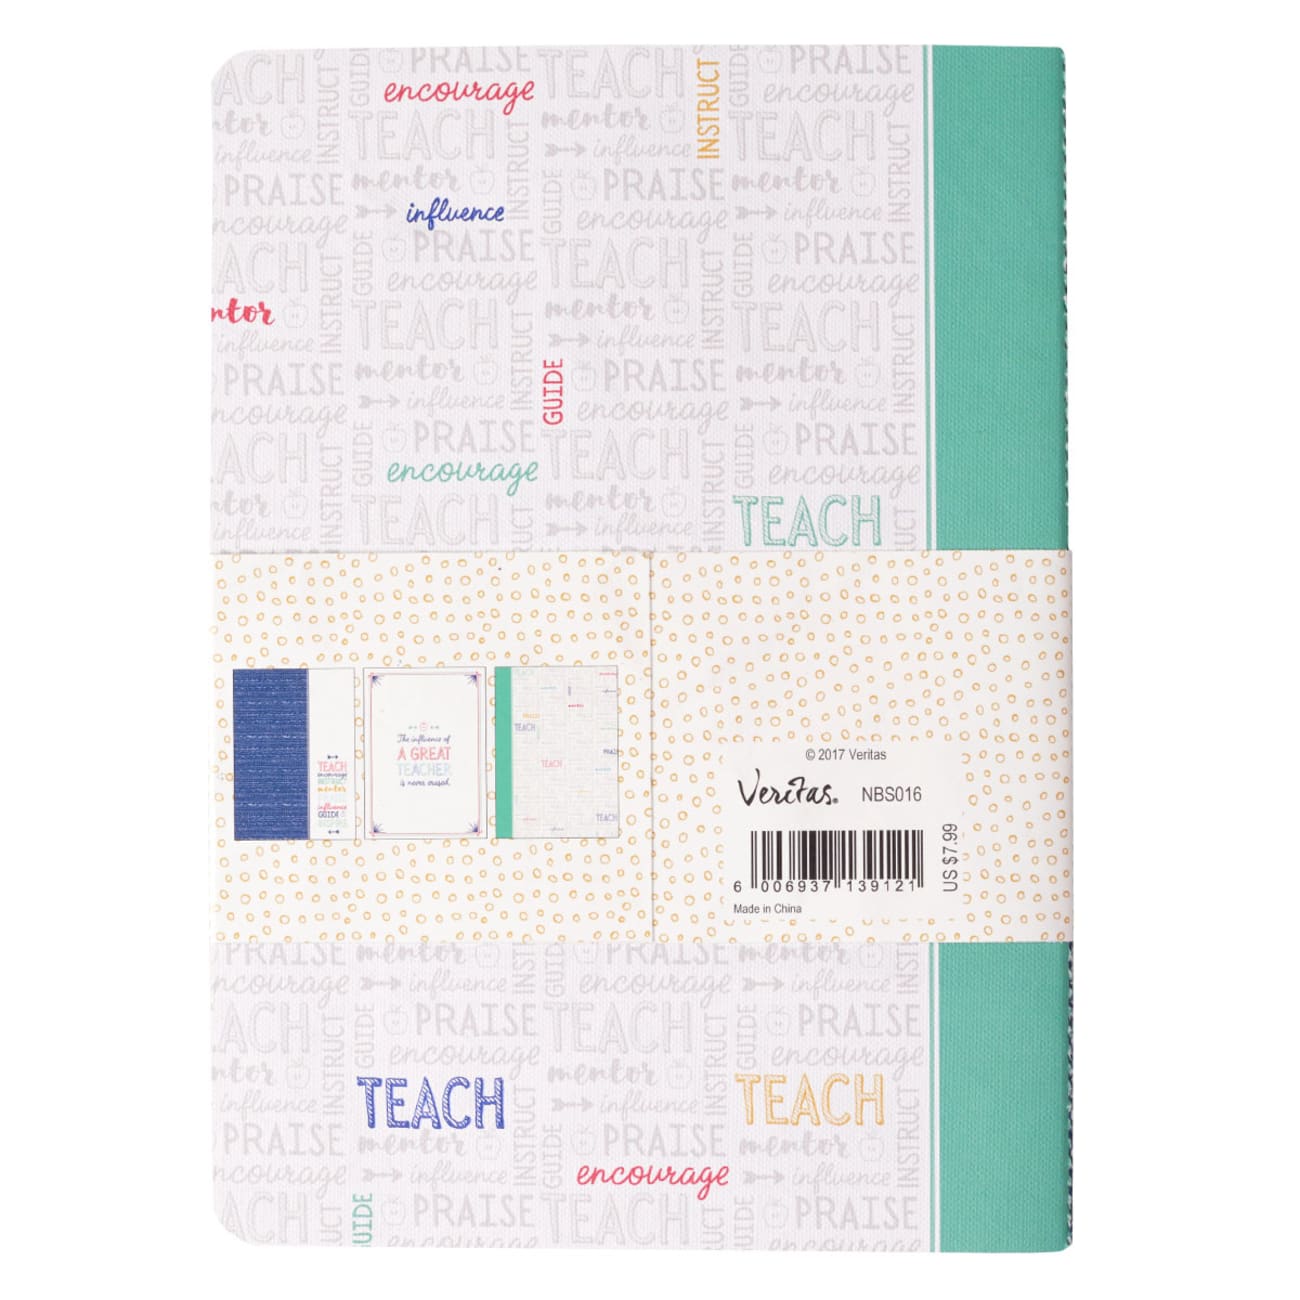 Notebook : Teacher Collection (Set of 3) (A Great Teacher Collection) Paperback